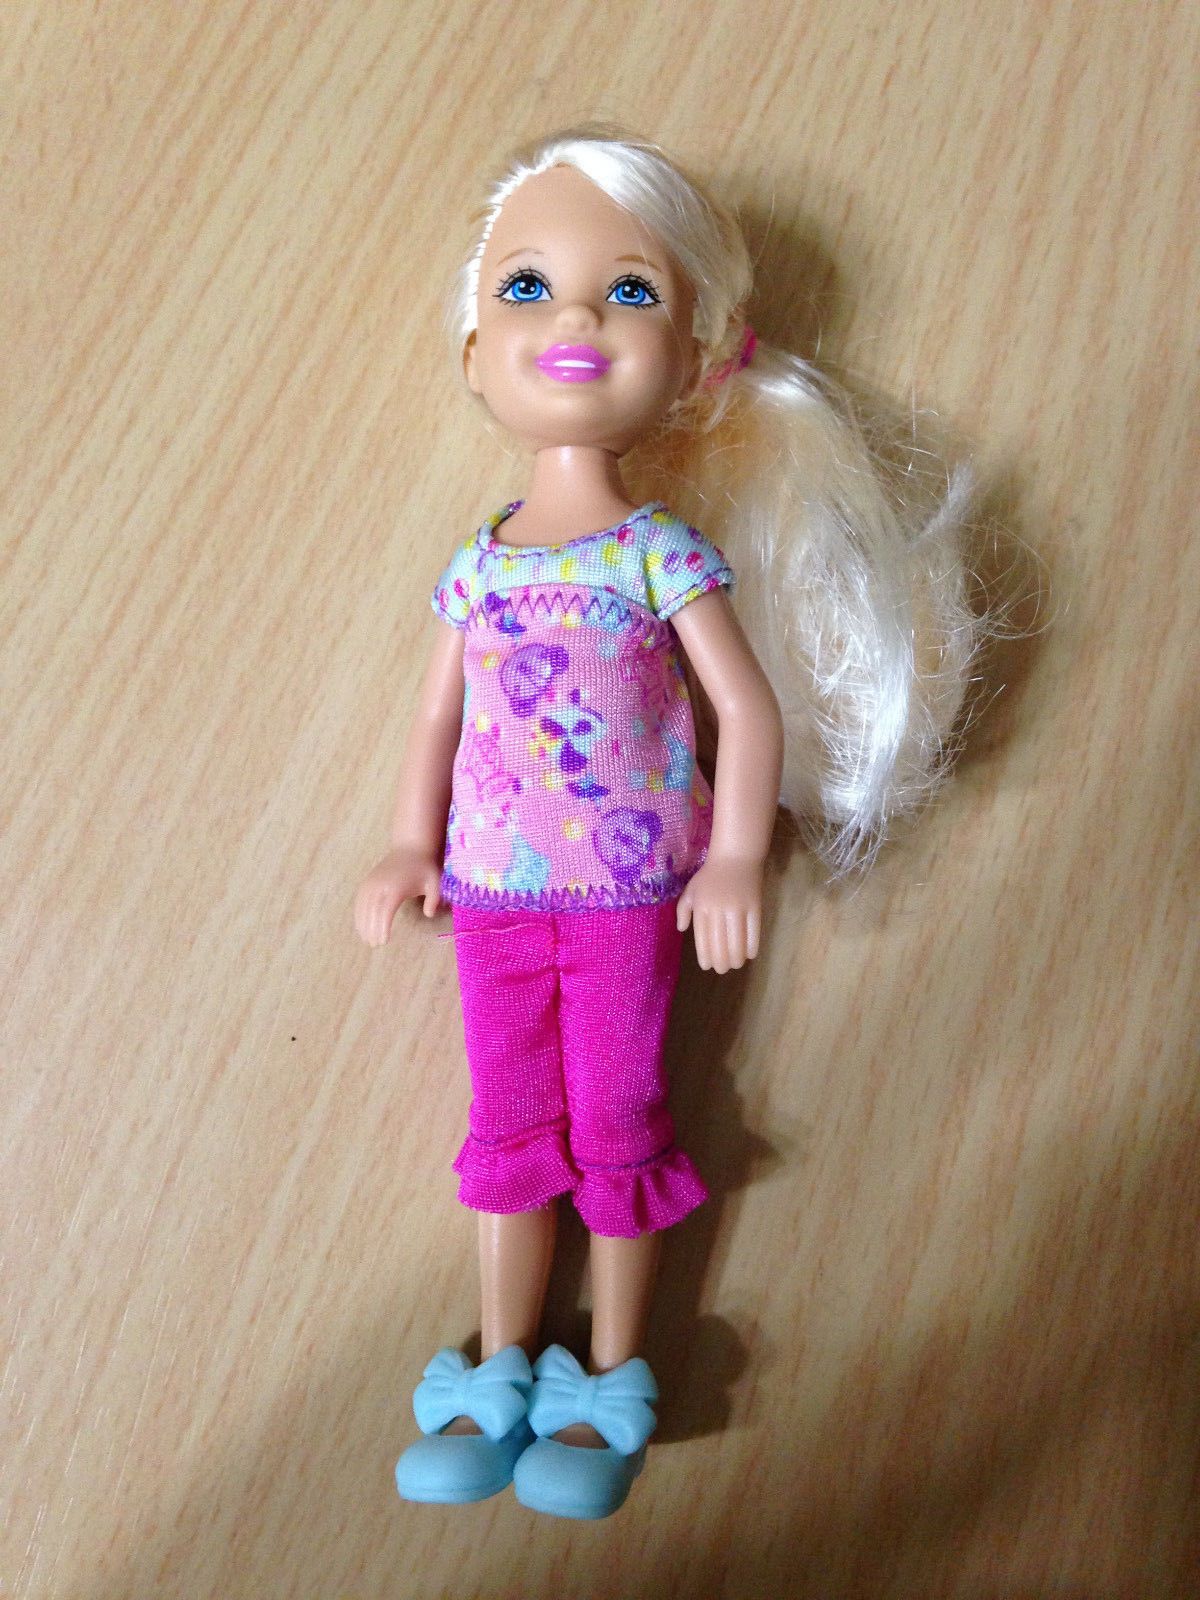 kelly roberts barbie doll